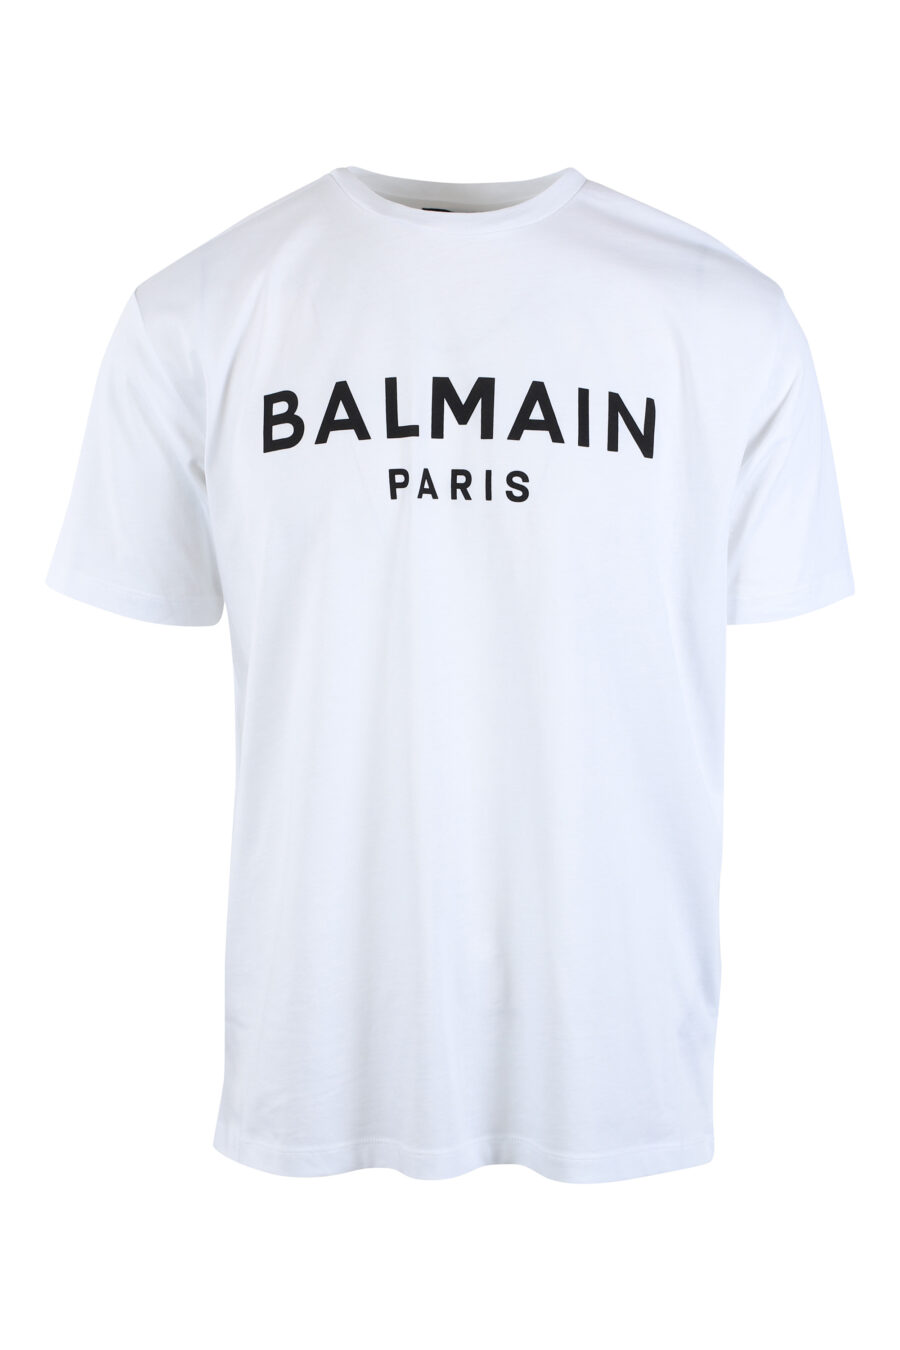 Camiseta blanca con maxilogo negro "paris" - IMG 2607